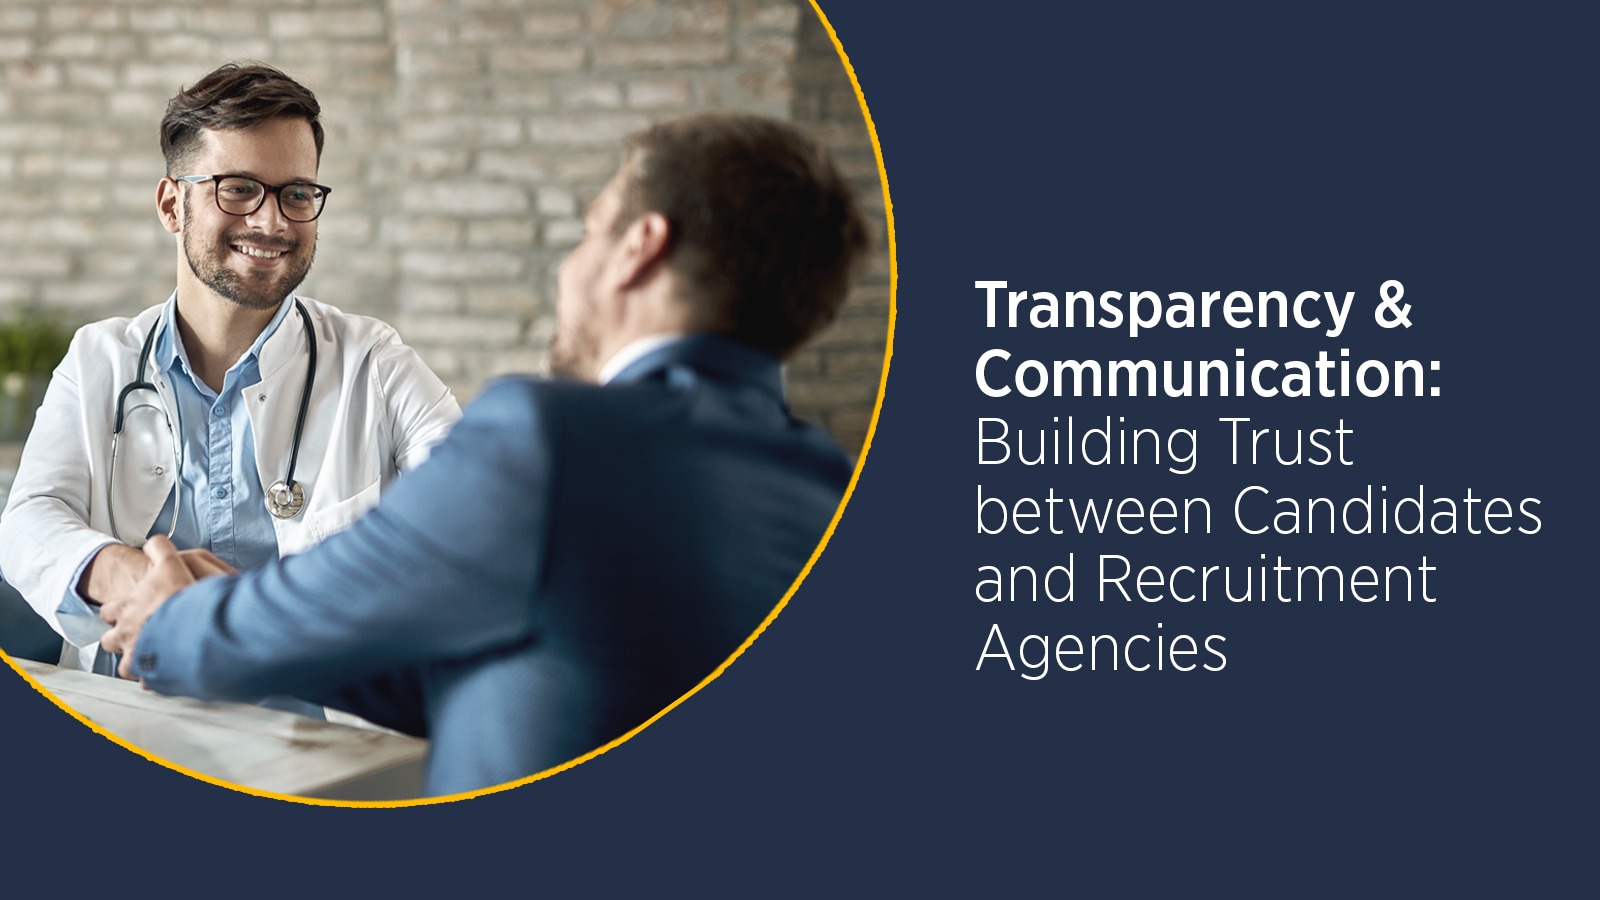 Building Trust between Candidates and Recruitment Agencies